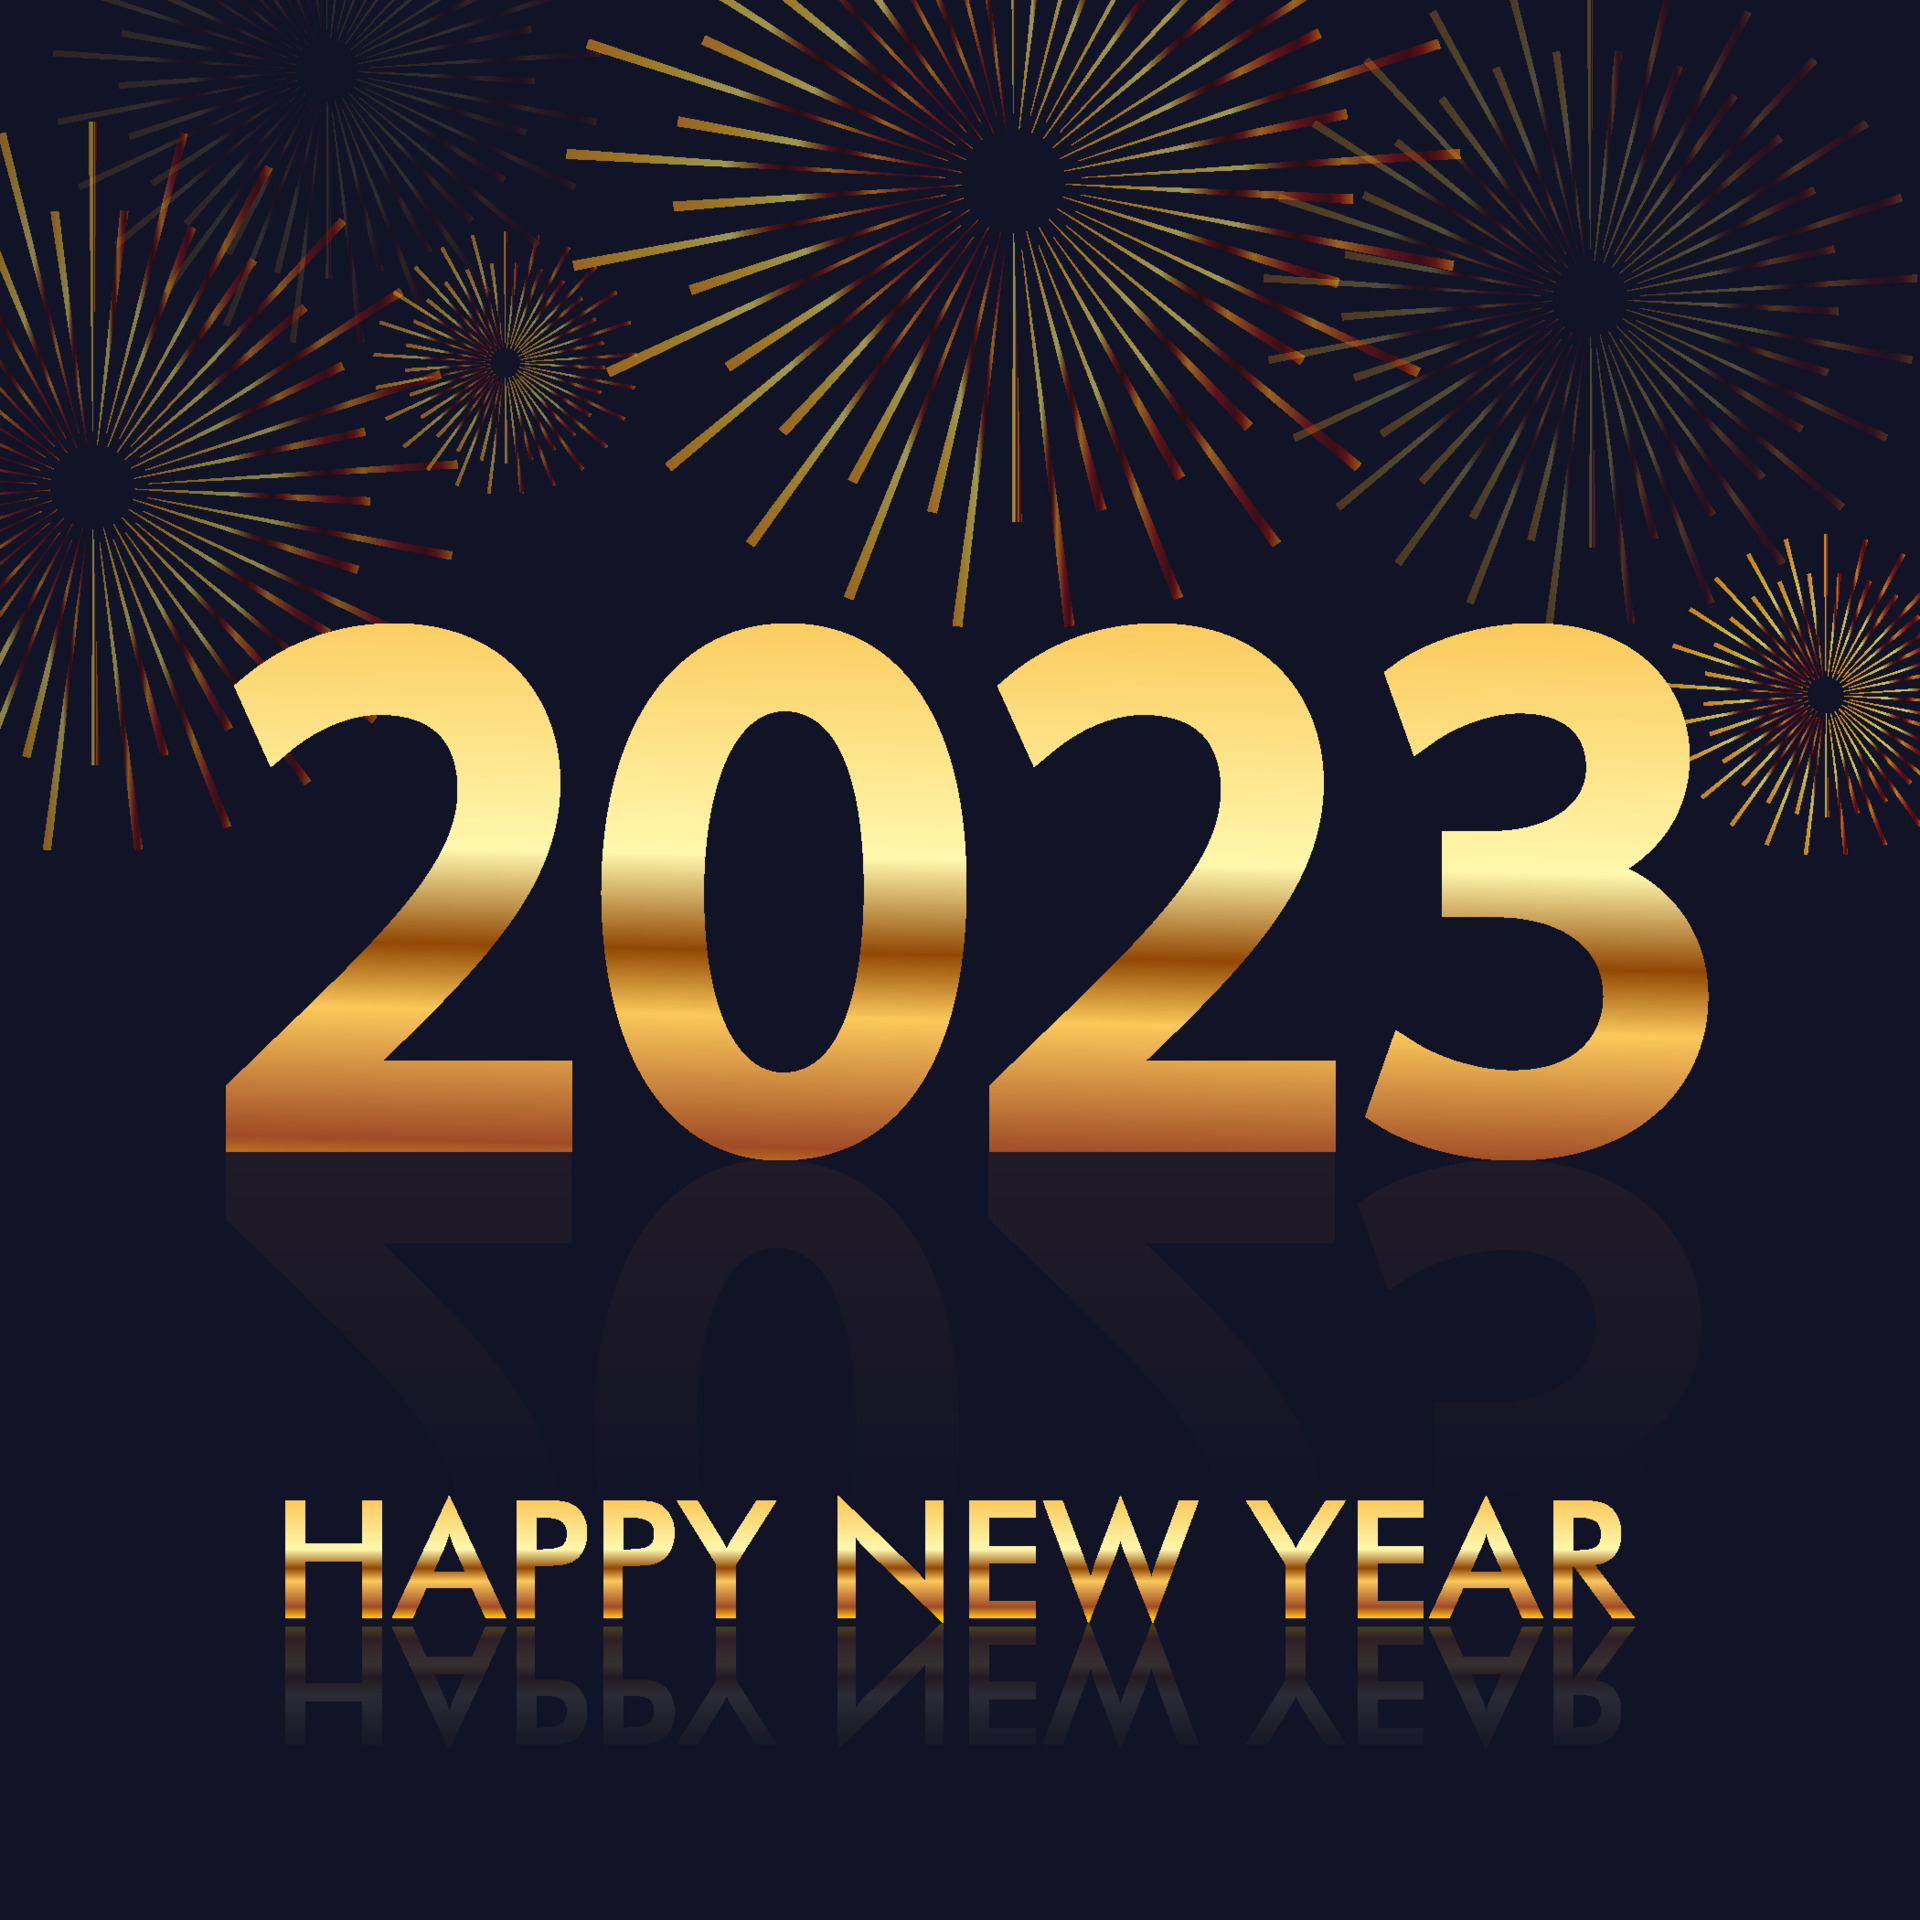 Happy New Year 2023 illustration with Fireworks black Background. Holiday symbol. Golden Textured Vintage Label